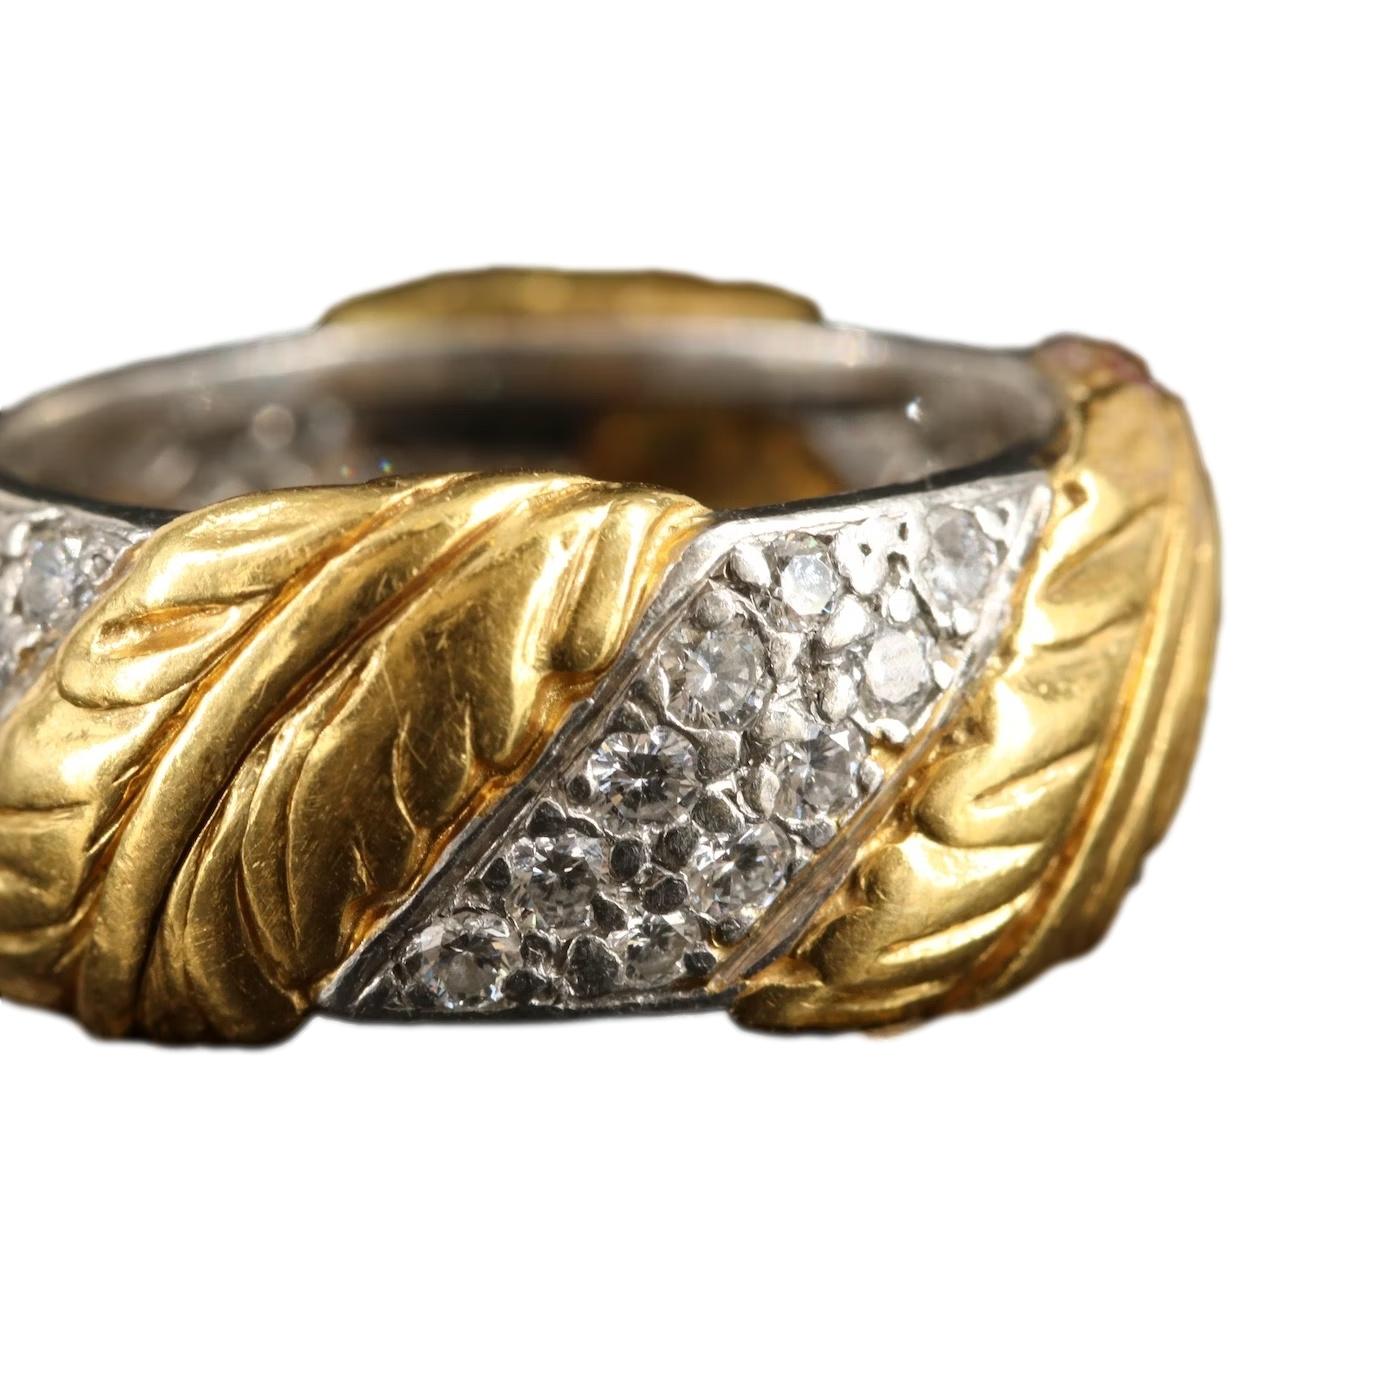 Stunning Vintage Tiffany & Co. 18k Gold & Platinum Diamond Ring

Brand/Designer:	Tiffany & Co.
Style:	Vintage
Materials:	18K Gold, Platinum
Ring Size:	5.00
Hallmarks:	© TIFFANY & Co. 750 PT950
Total Weight (grams):	9.90
Additional Information:	Band